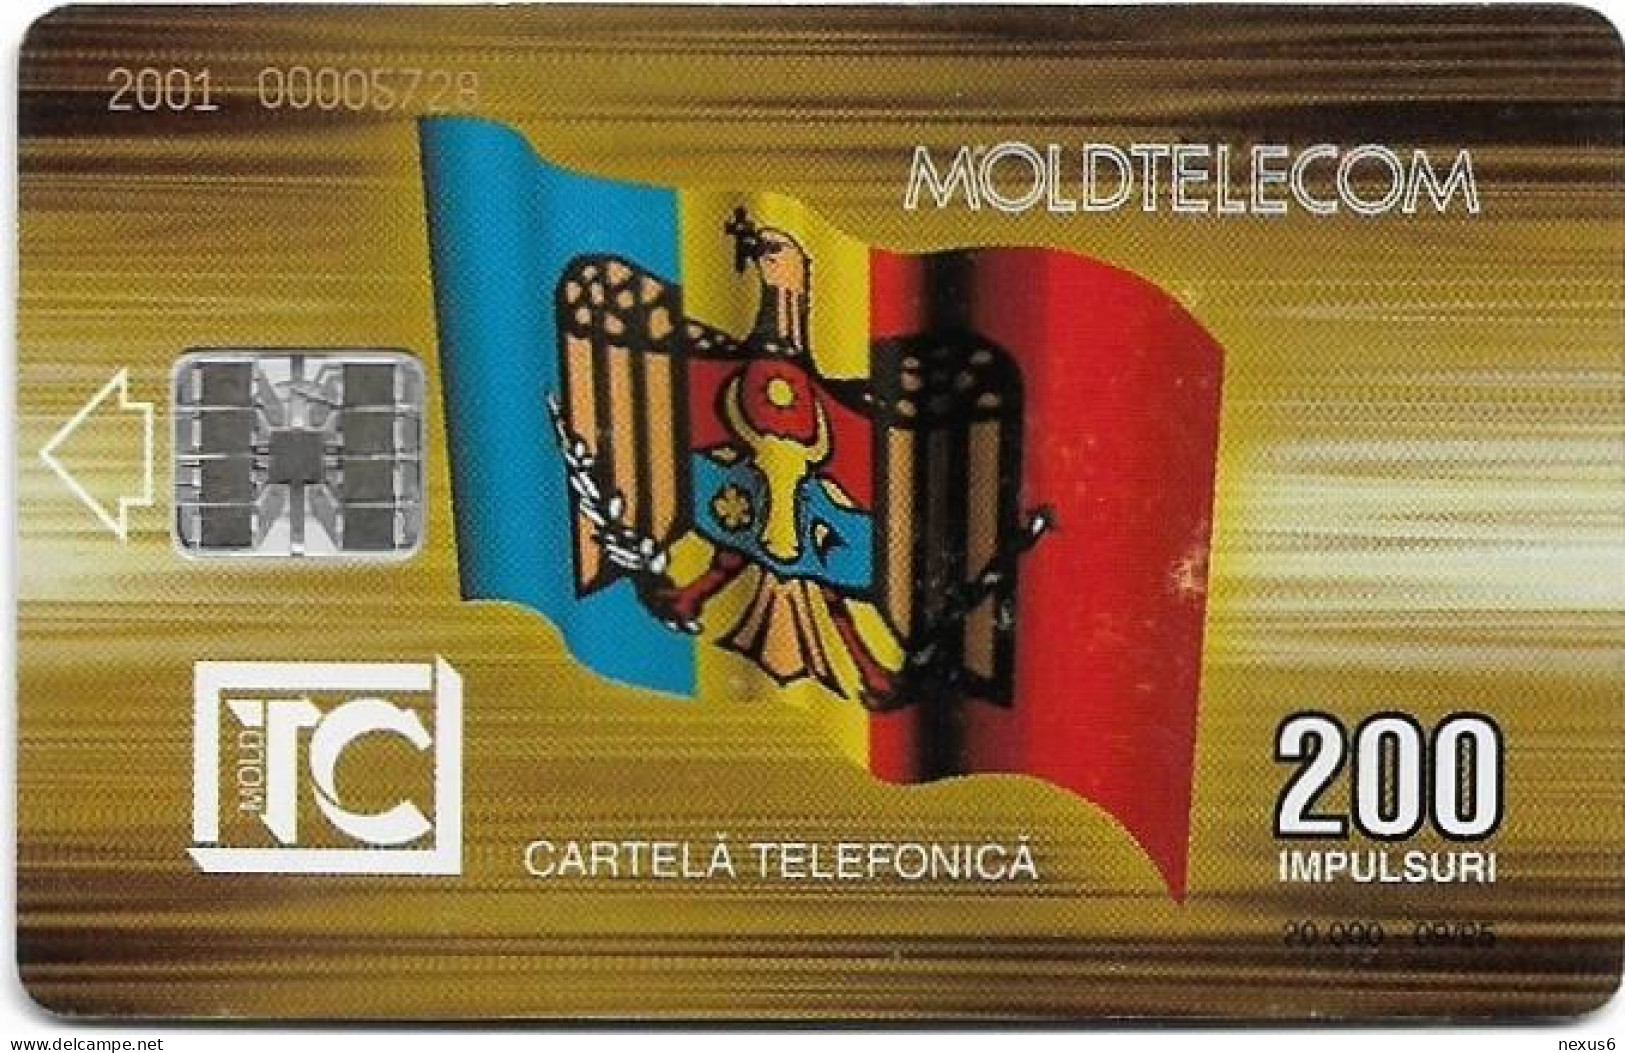 Moldova - Moldtelecom - Flag 2nd Issue, SC7, 09.1995, 200U, 20.000ex, Used - Moldavie